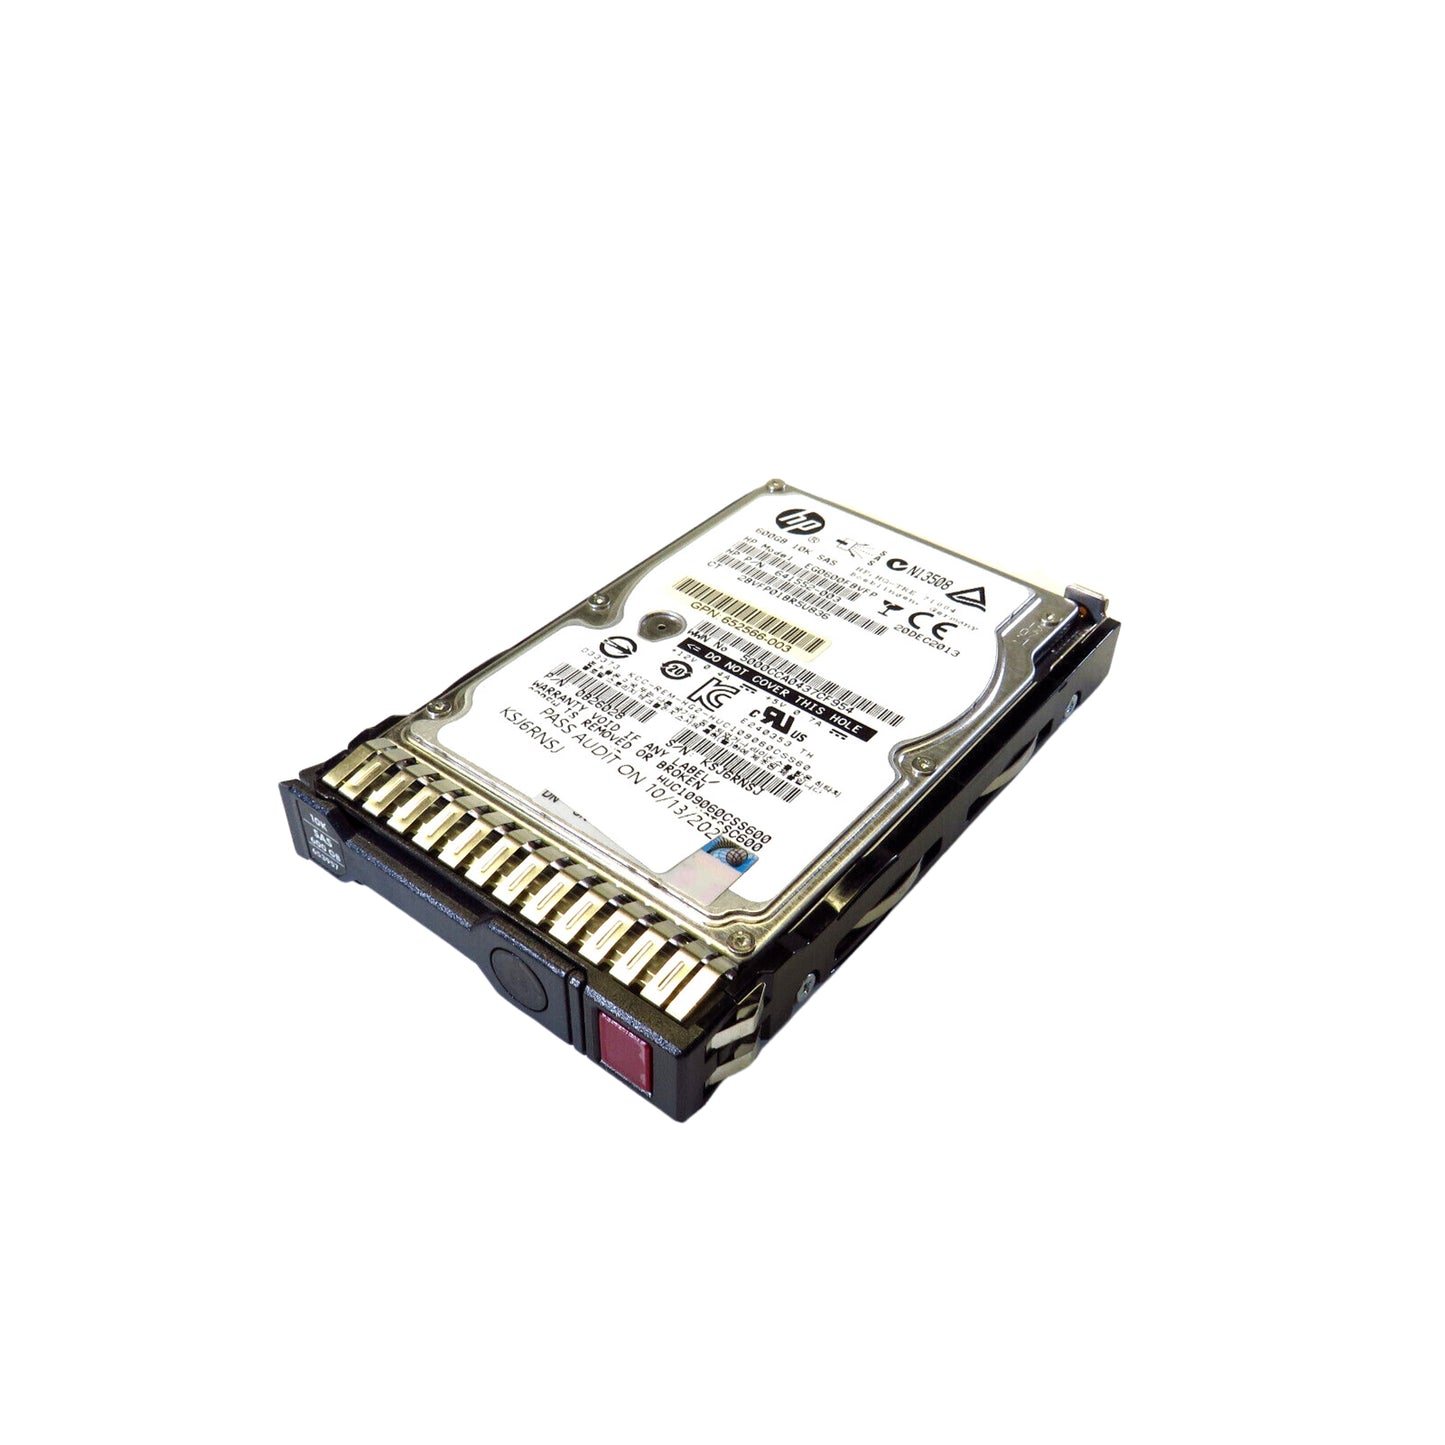 HP 653957-001 2.5" 600GB 10000RPM SAS 6Gb/s Hard Disk Drive (HDD), Silver (Refurbished)